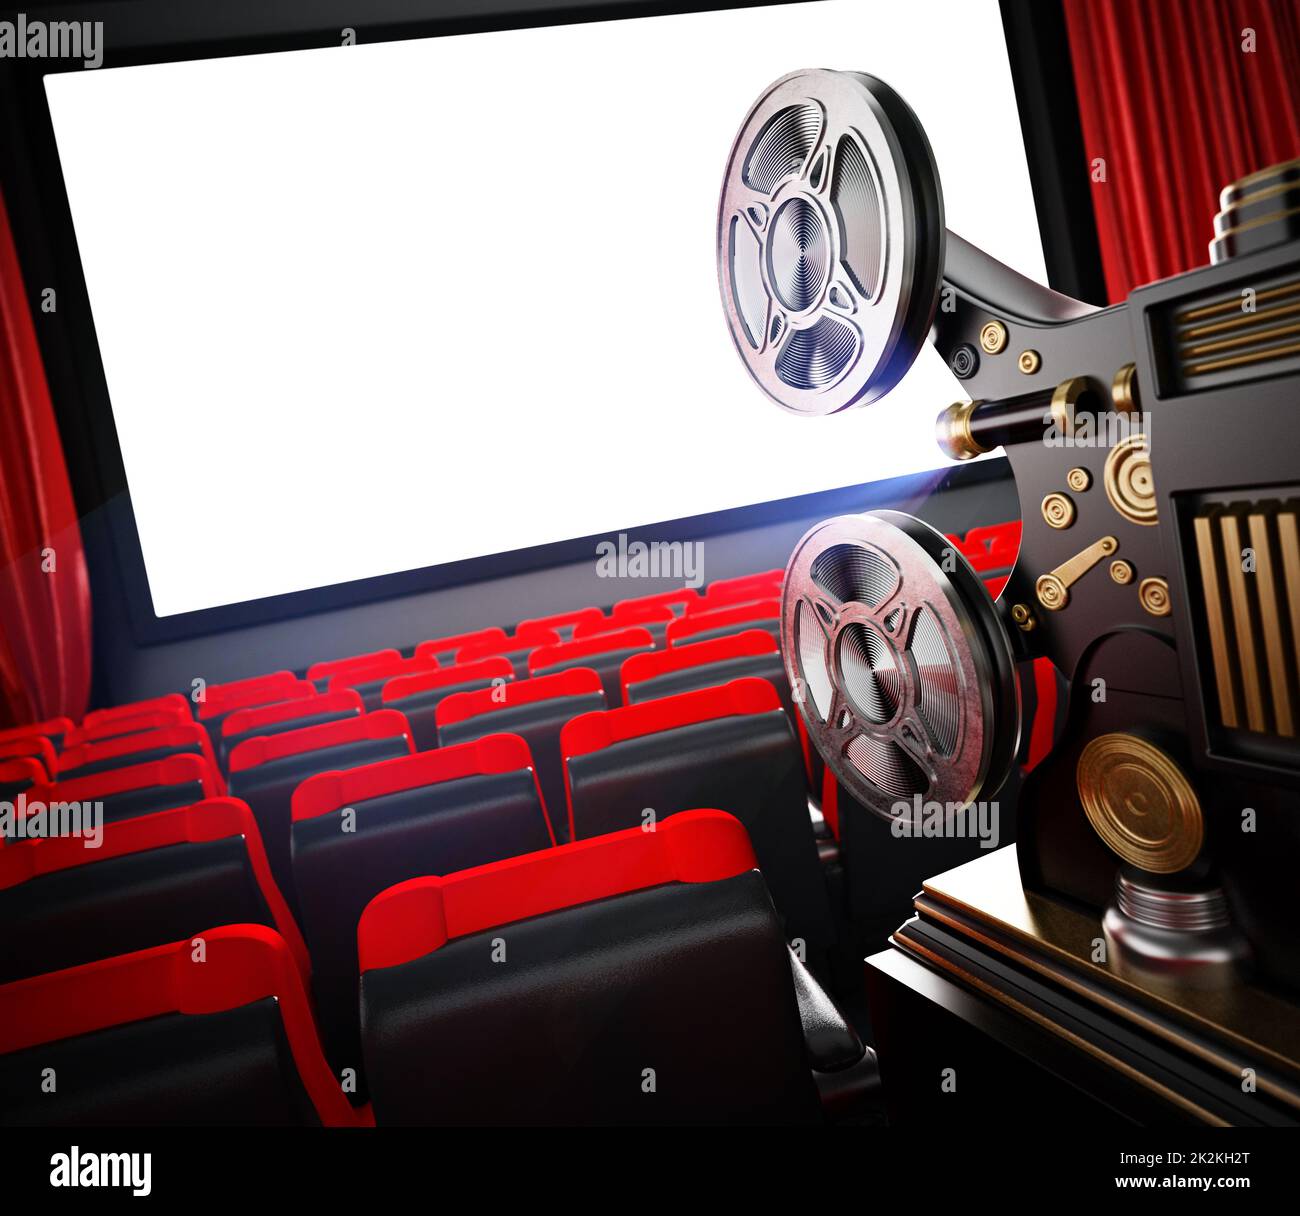 Vintage cinema projector in cinema theater. 3D illustration Stock Photo